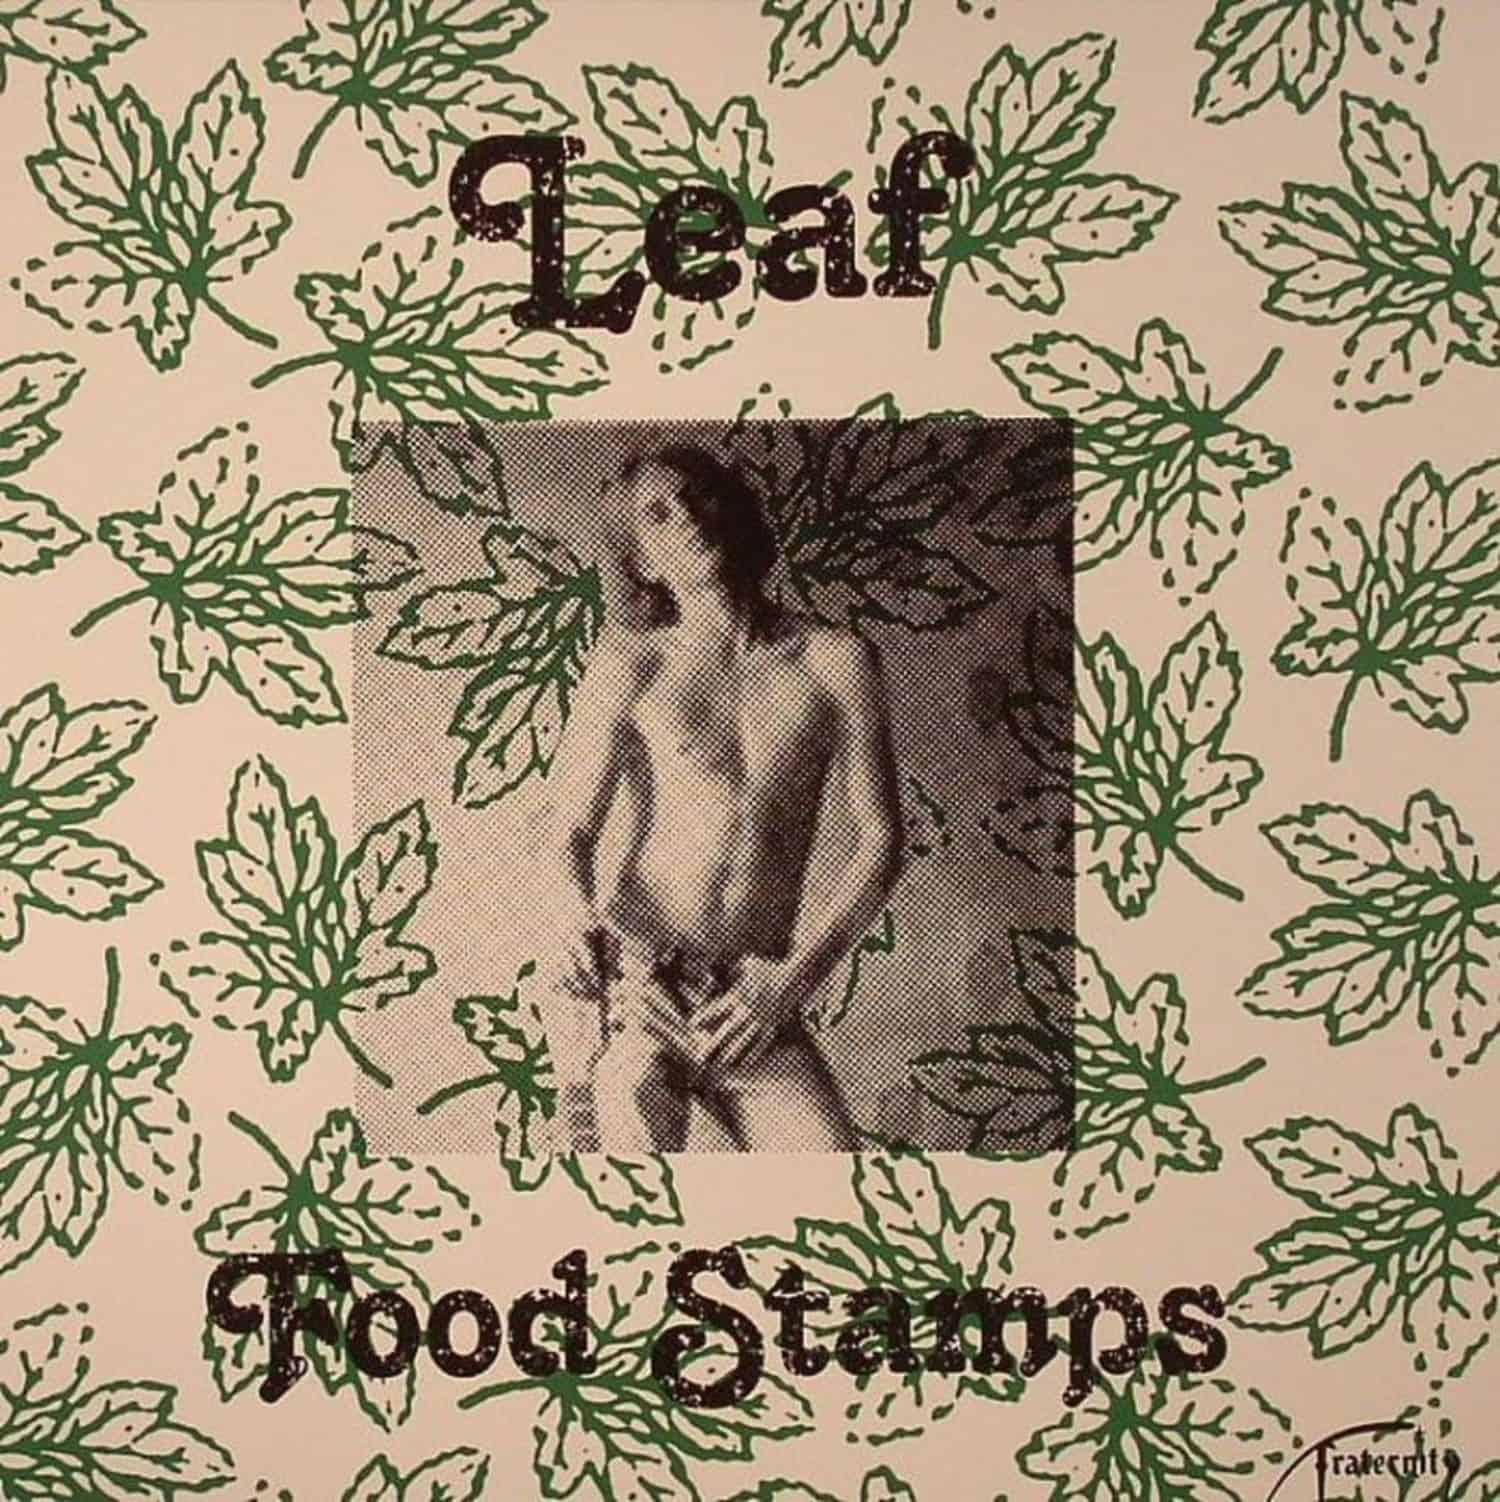 Leaf - FOOD STAMPS / HOW DO I KNOW 